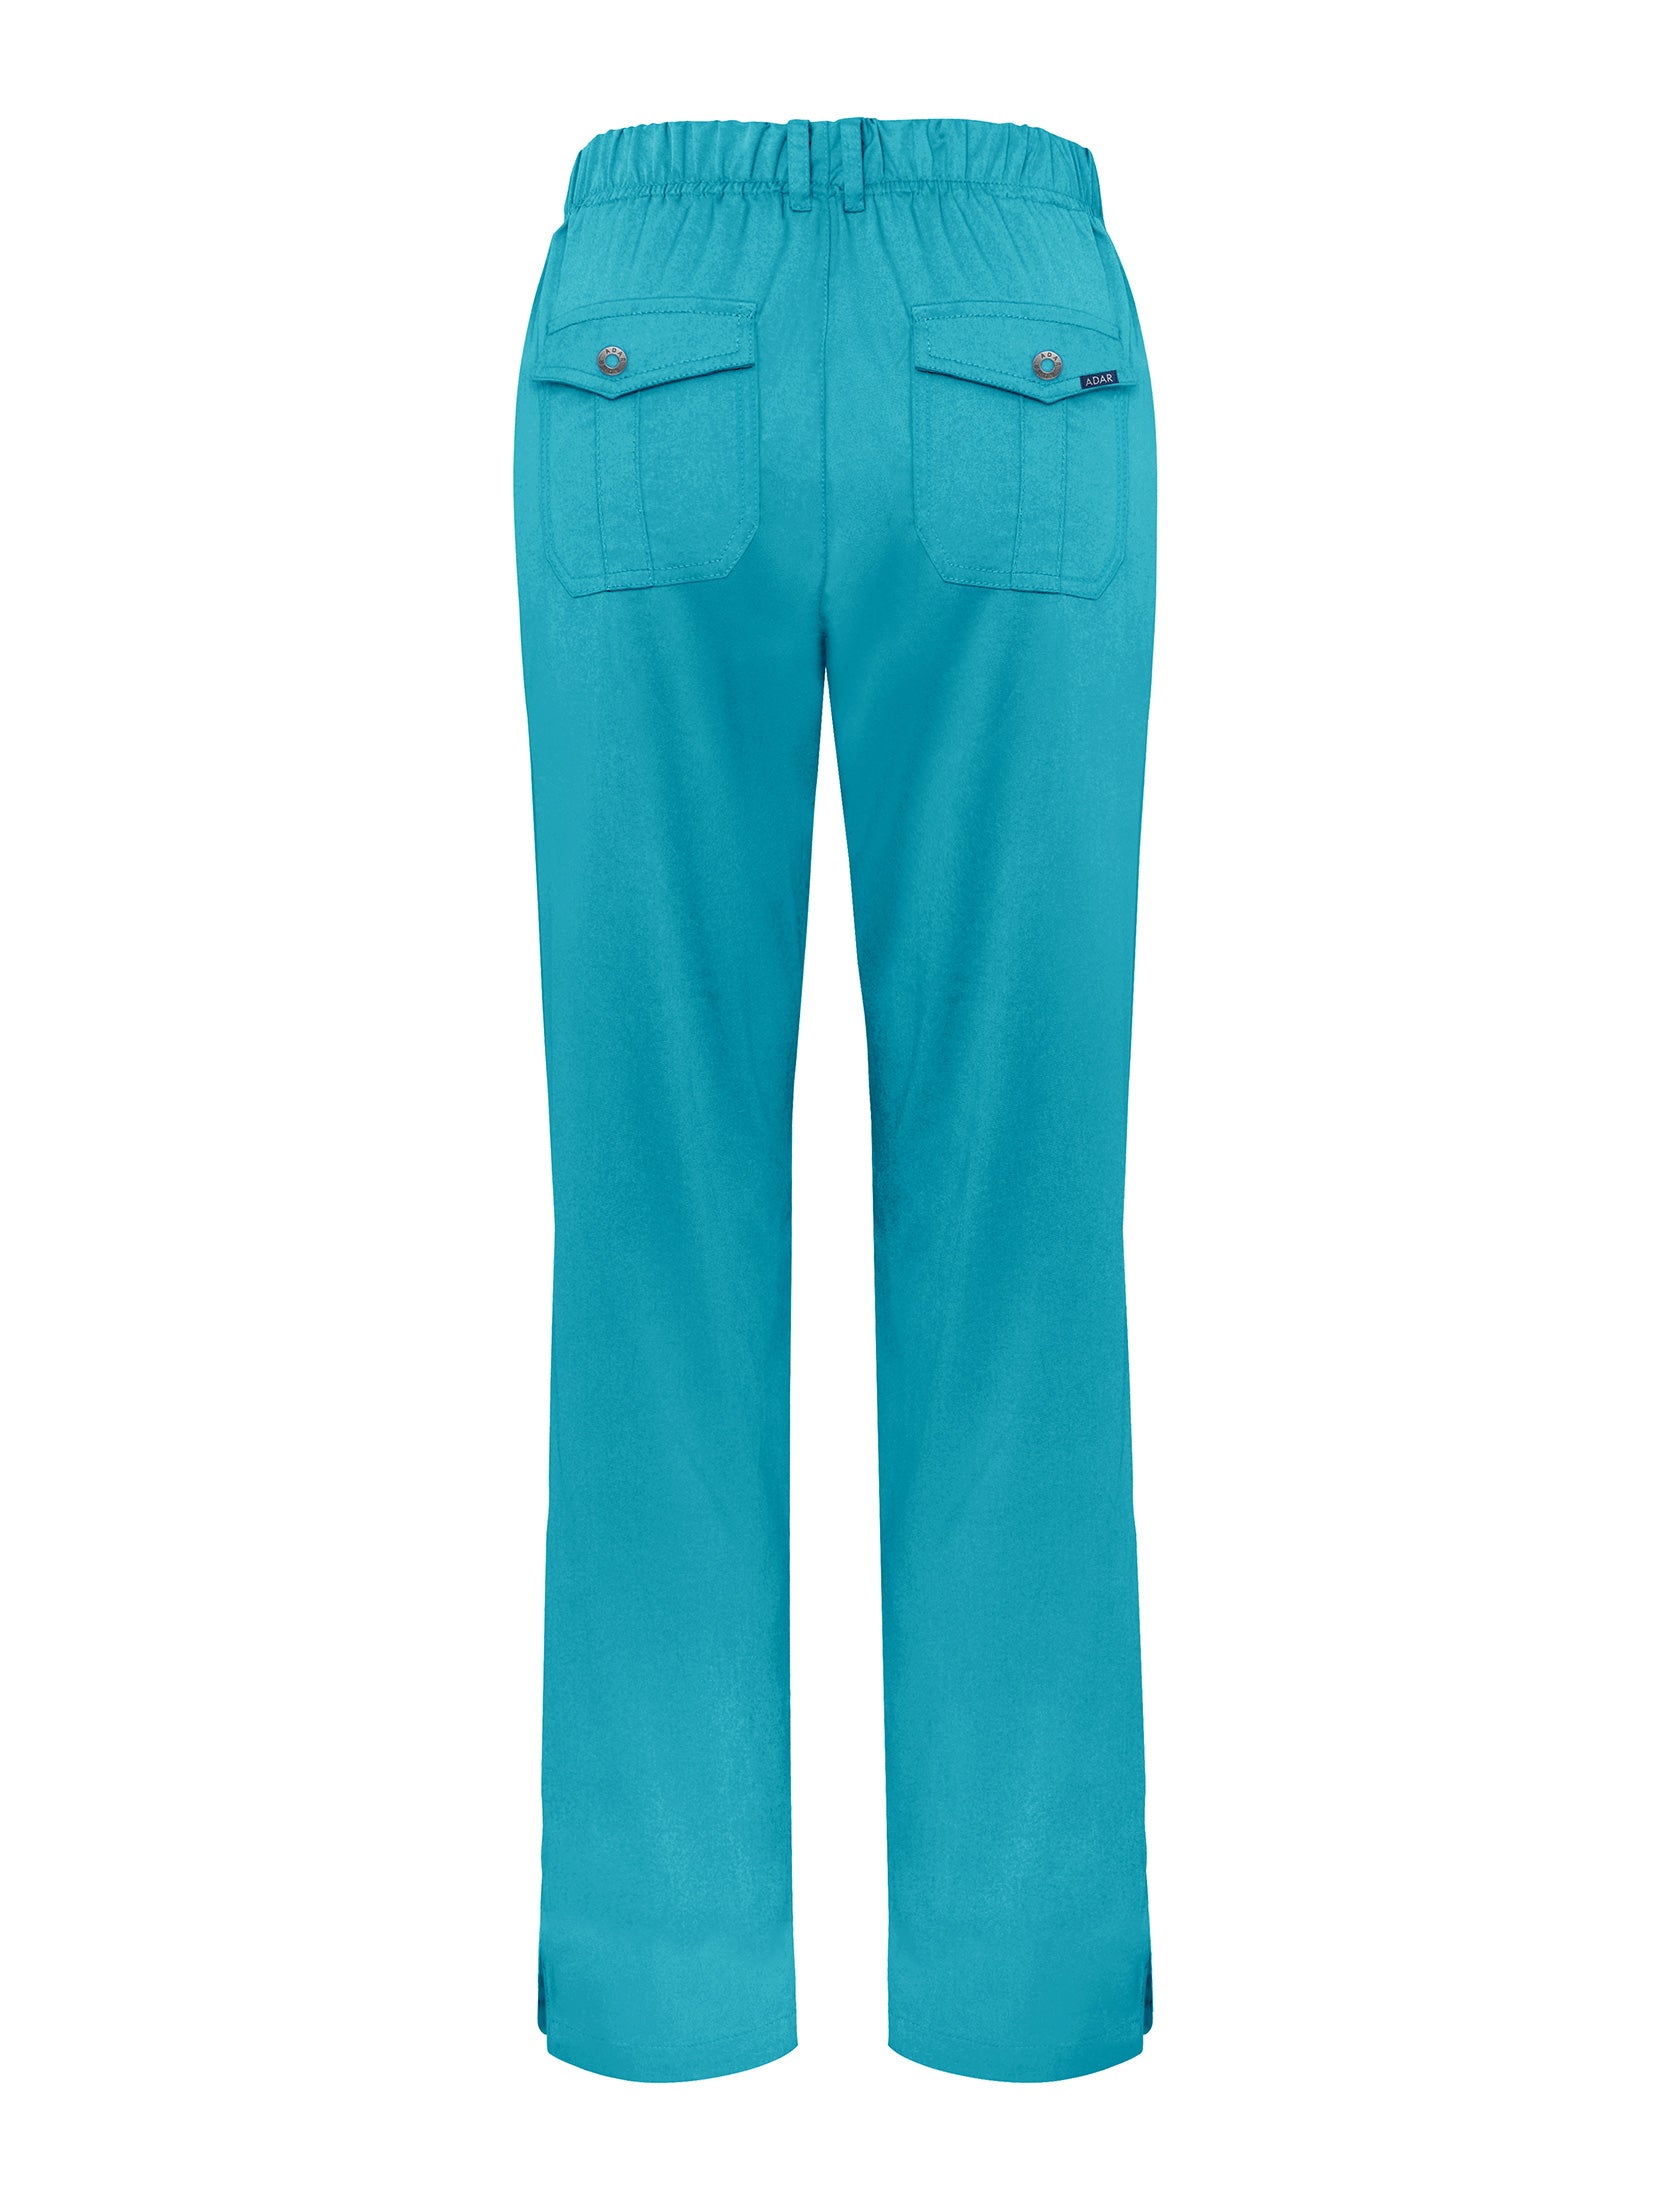 ADAR Pro Women's Slim Fit 6 Pocket Pant (More Color) – Faith Hope Love  Scrubs